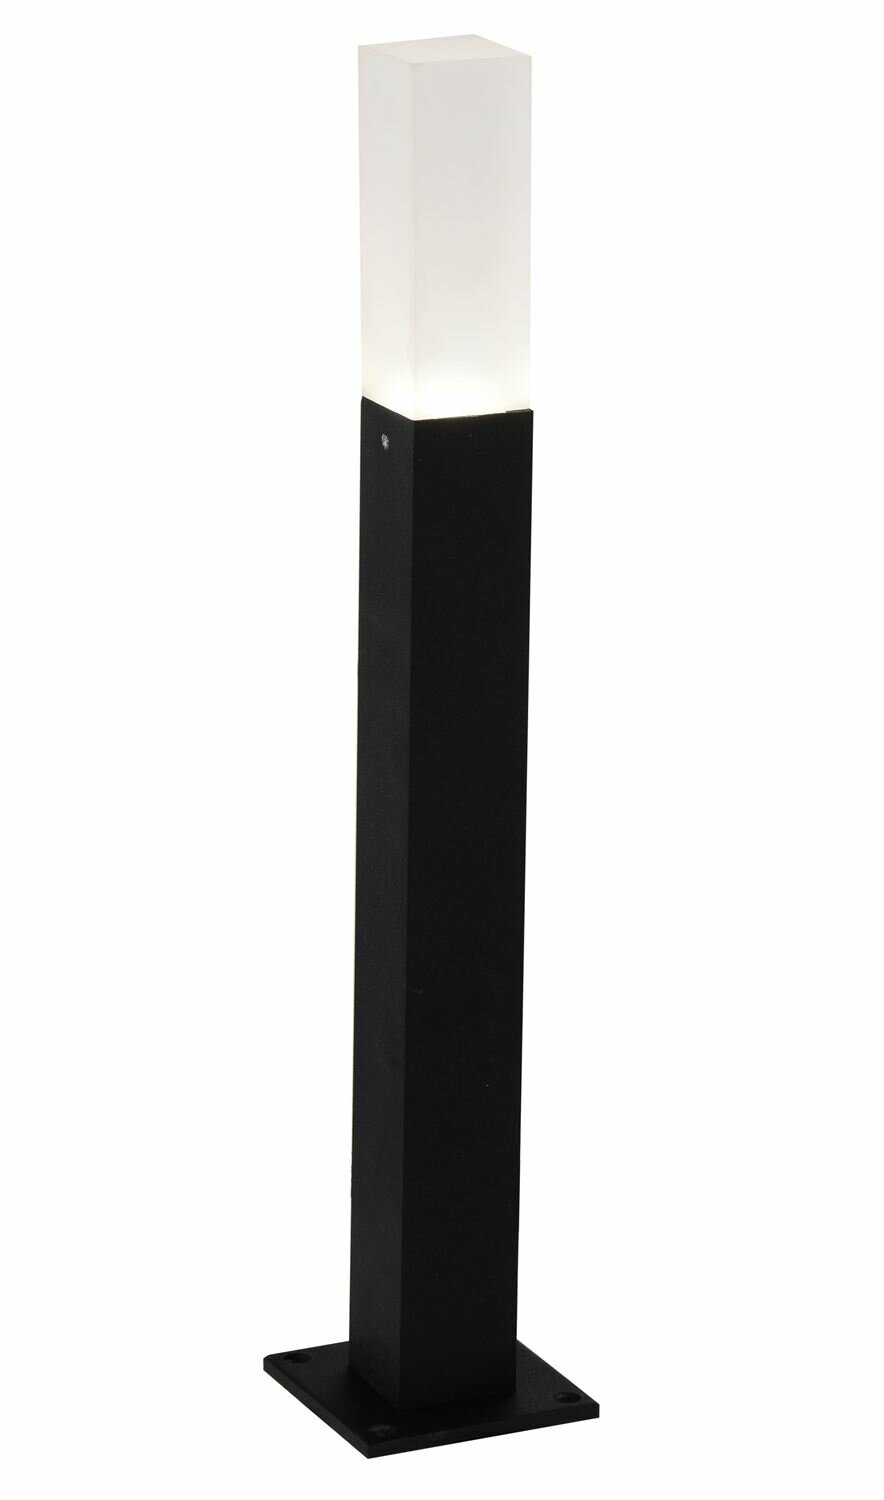 ST Luce уличный наземный светильник Vivo SL101.705.01/SL101.405.01 светодиодный